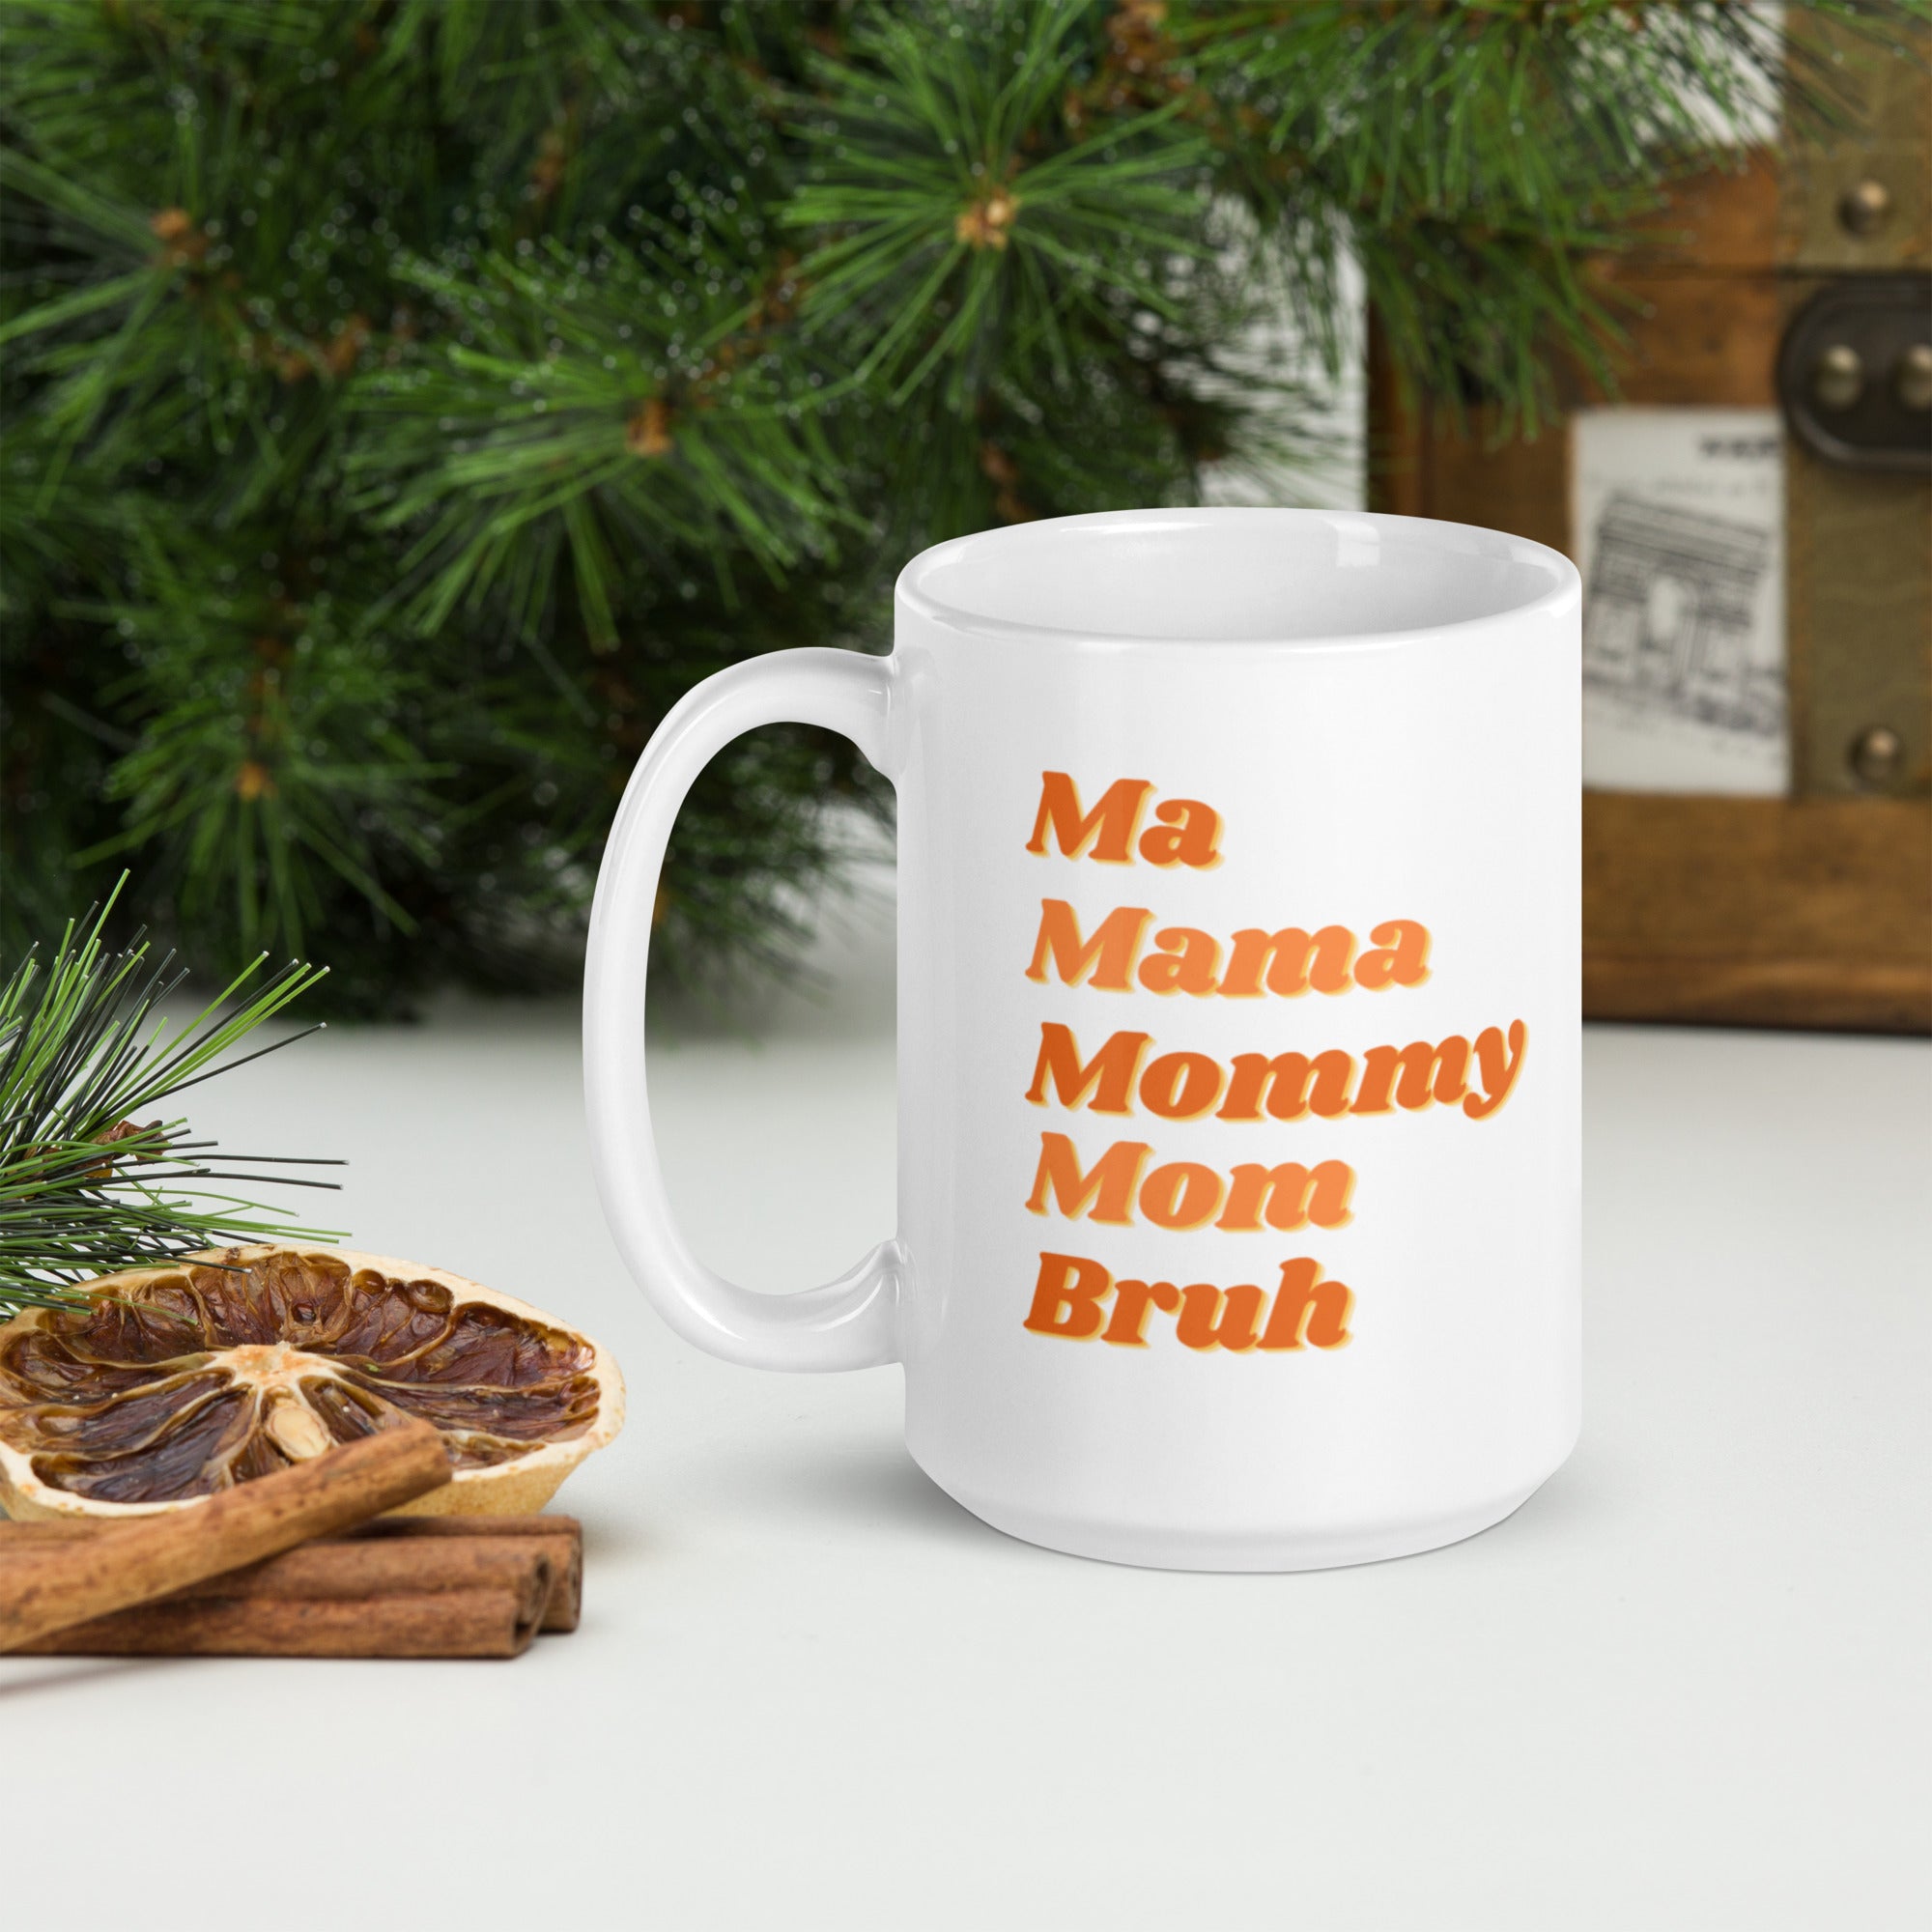 MAMA MOMMY MOM BRUH | CAMPFIRE COFFEE MUG